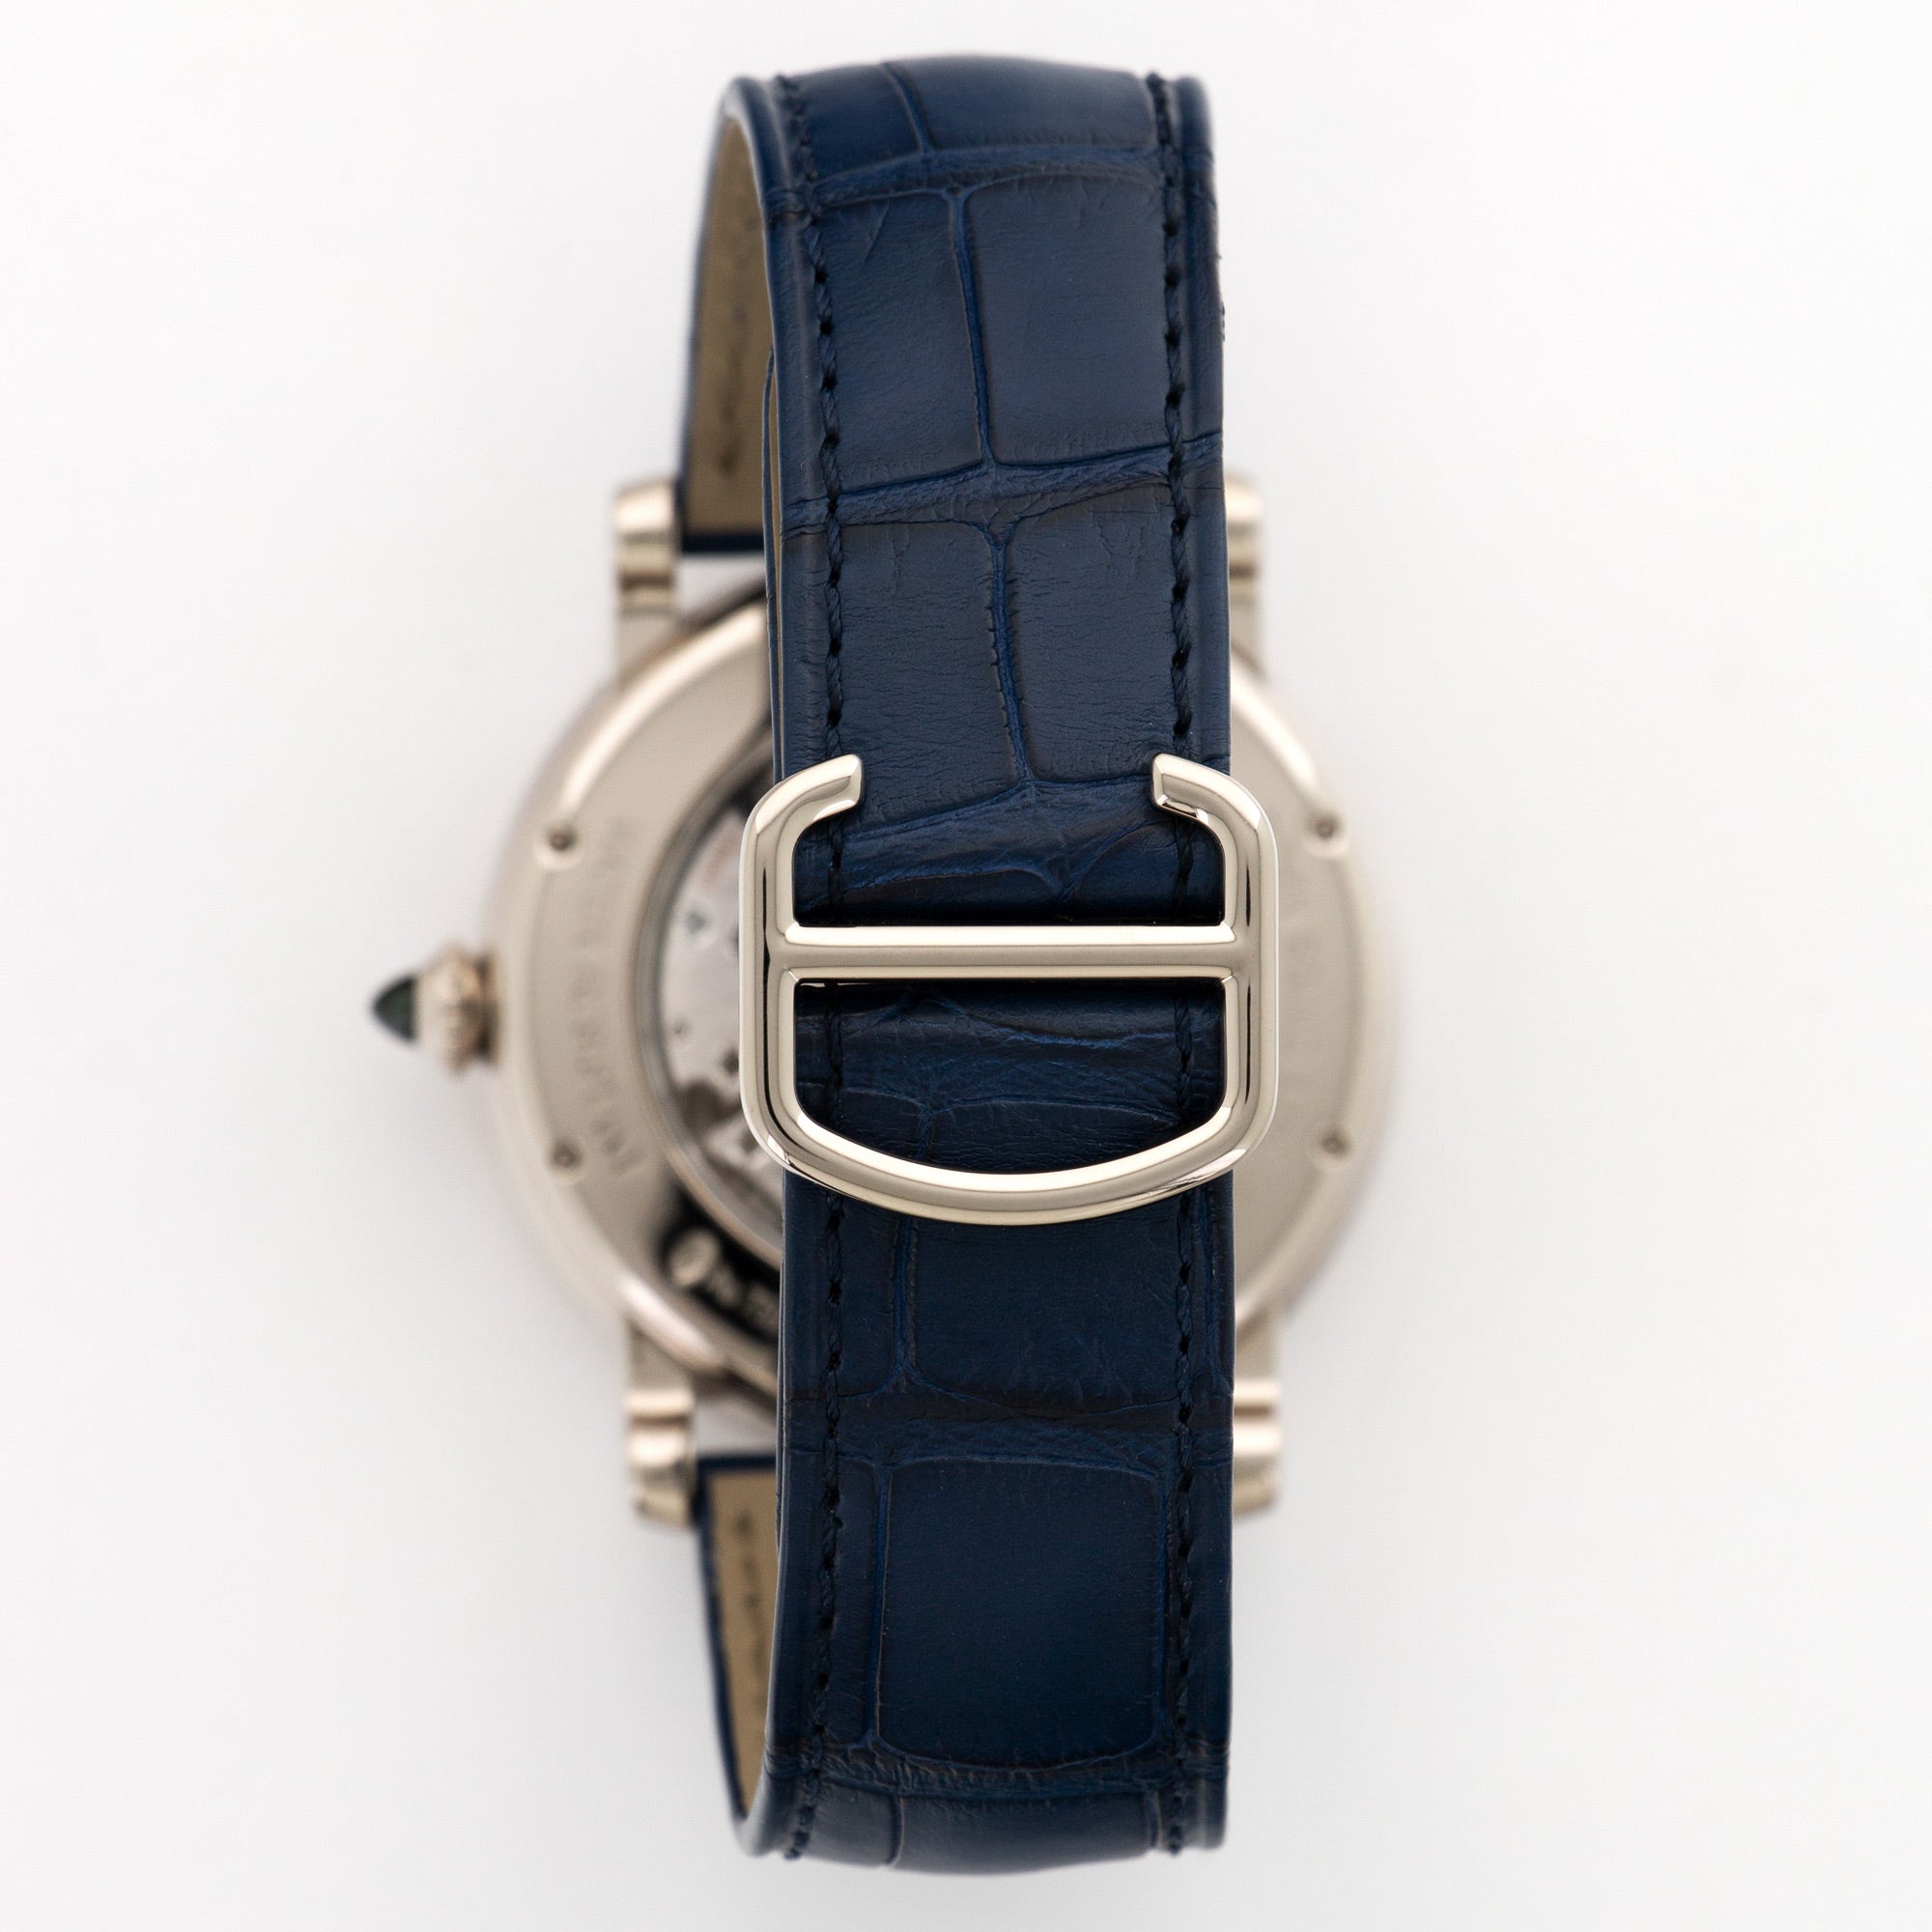 Cartier - Cartier White Gold Rotonde de Cartier Flying Tourbillon Watch - The Keystone Watches